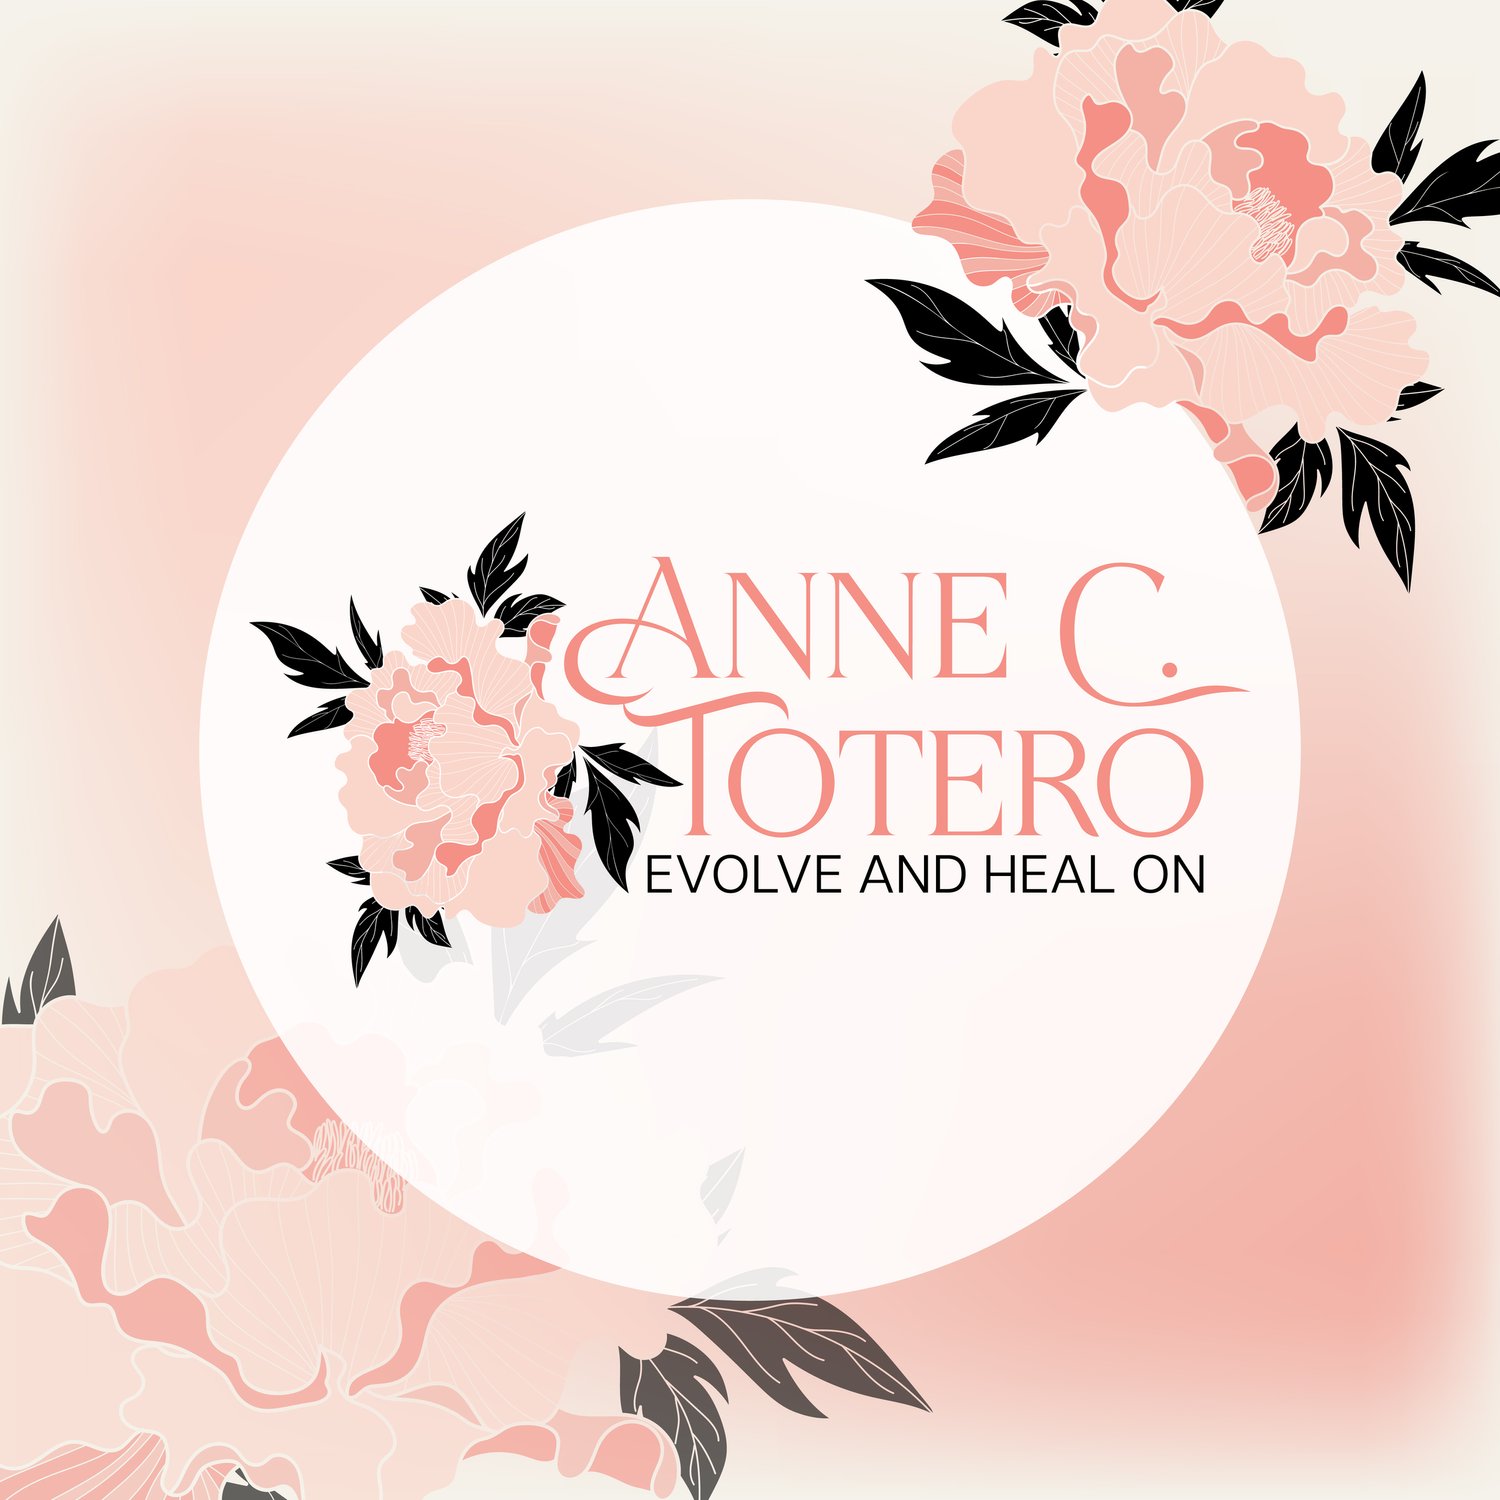 Anne C. Totero, LLC